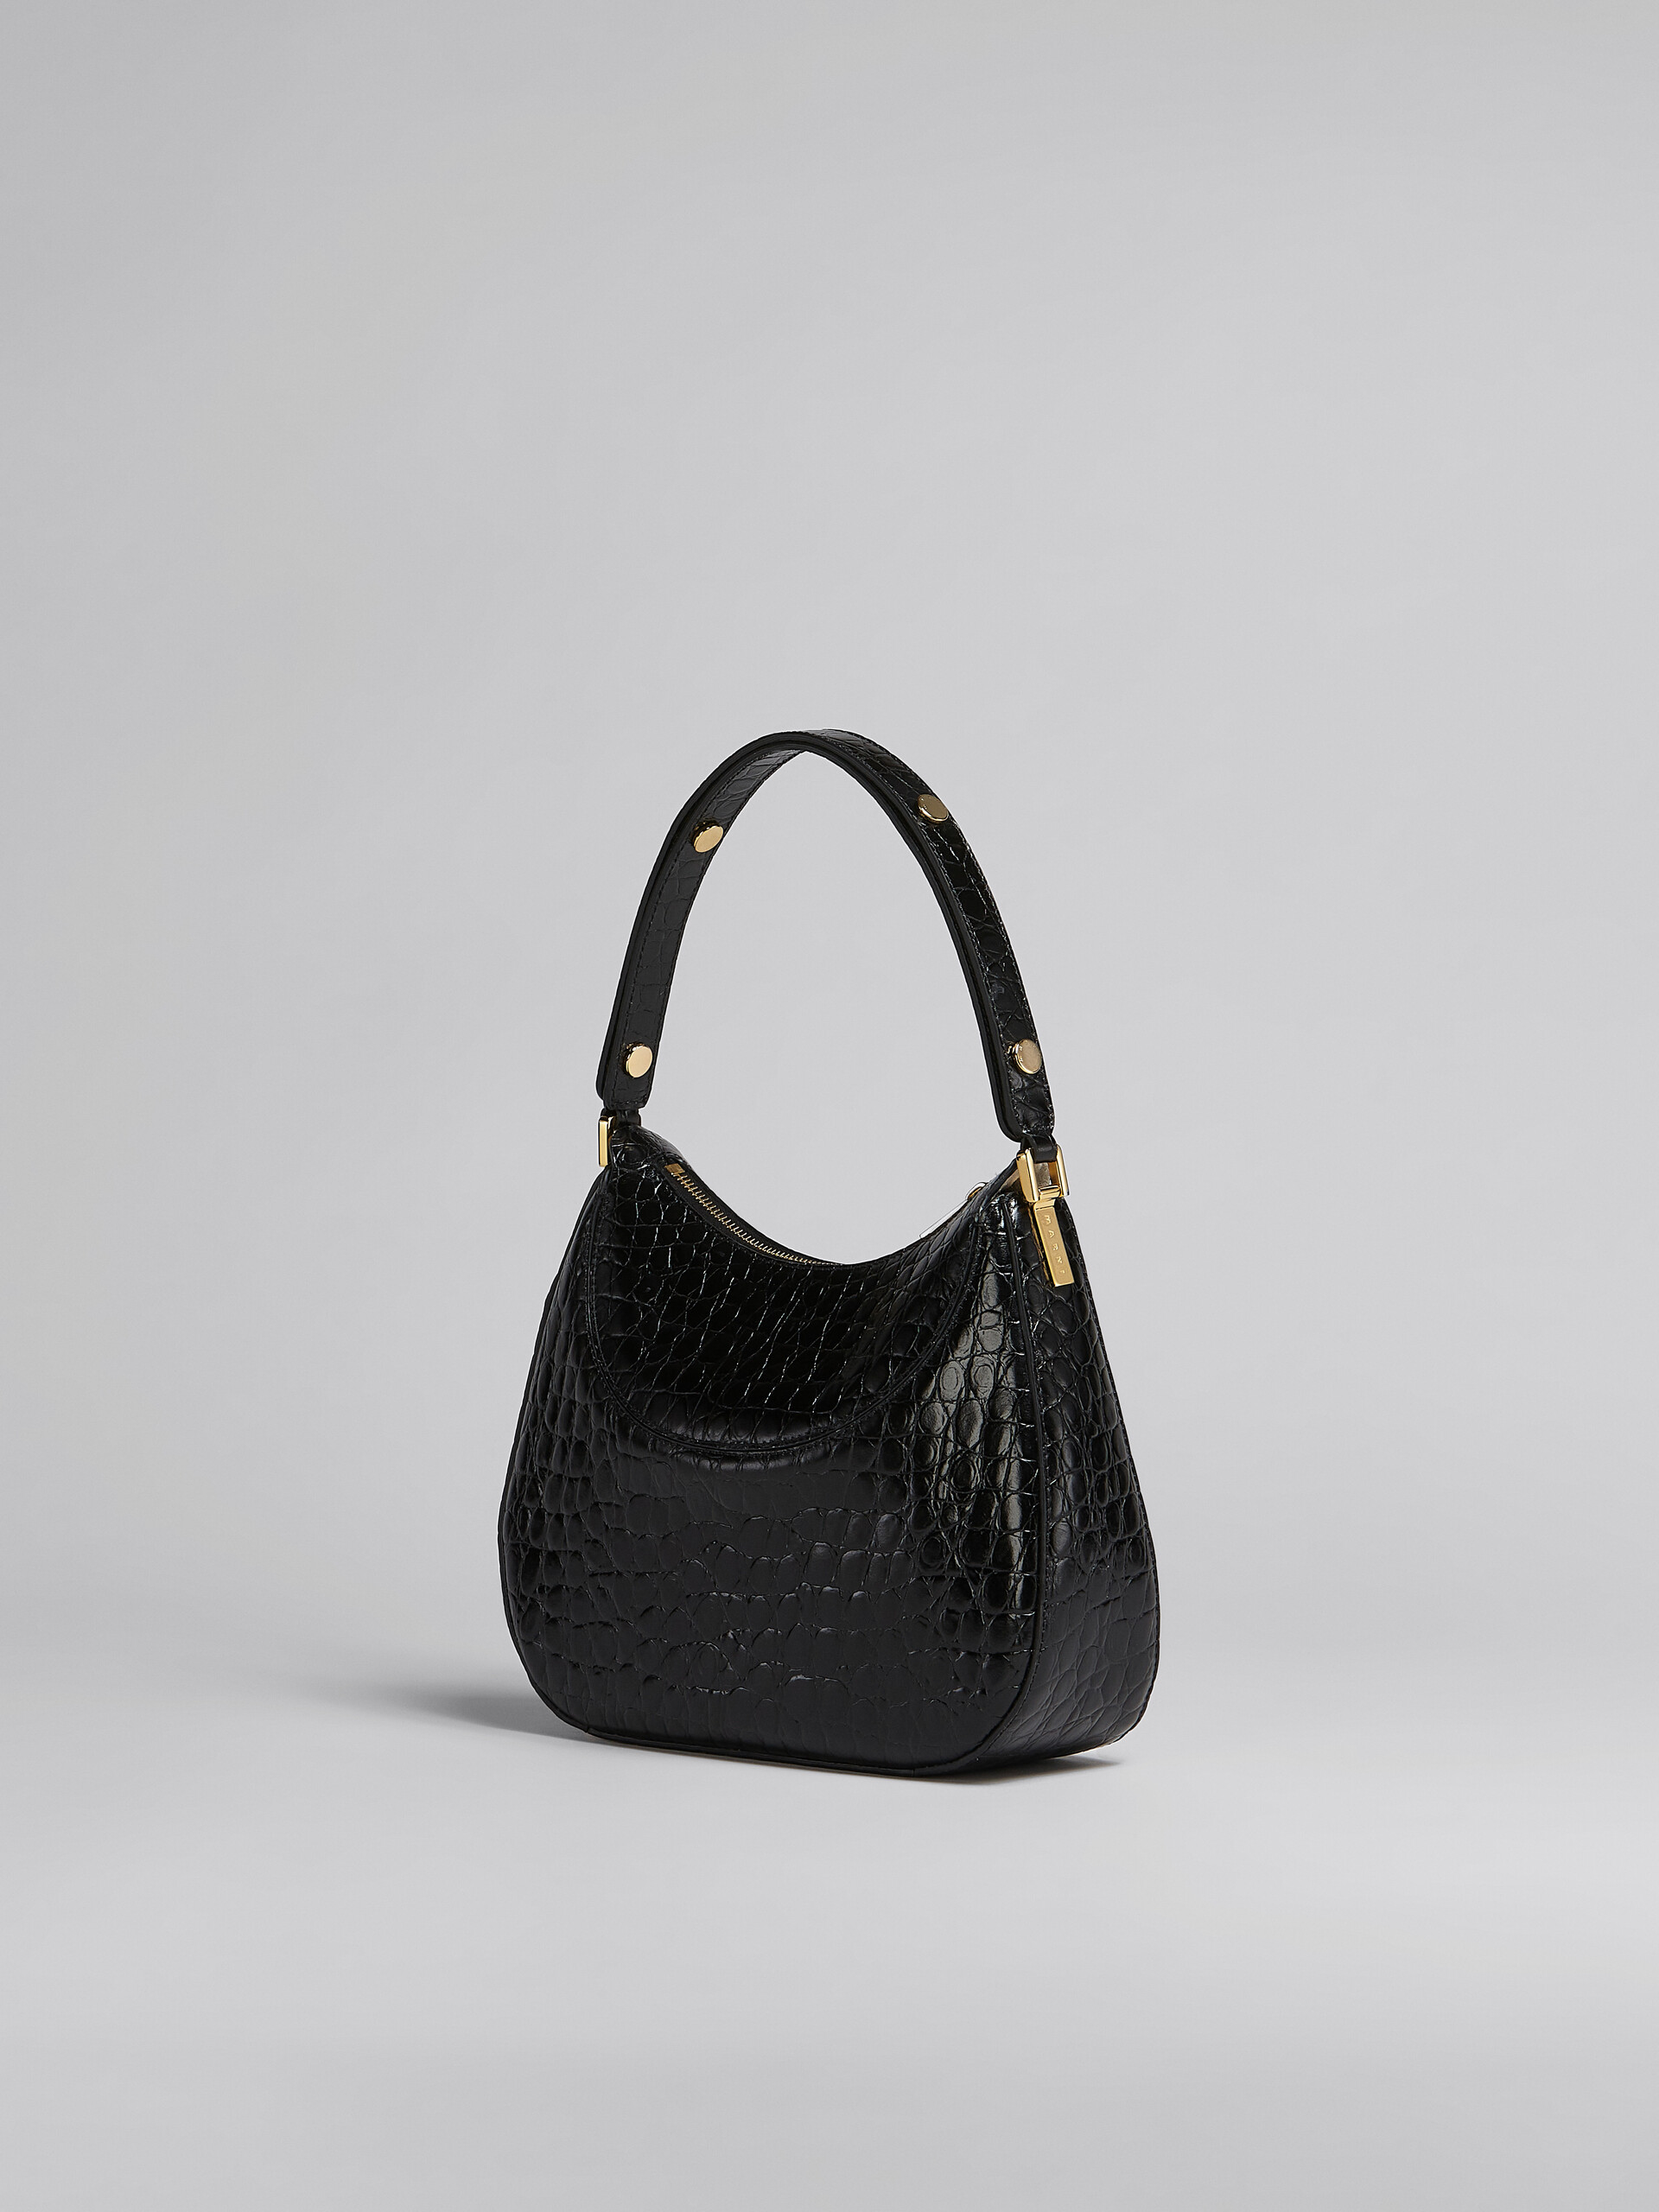 Milano Small Bag in black croco print leather - Handbag - Image 3